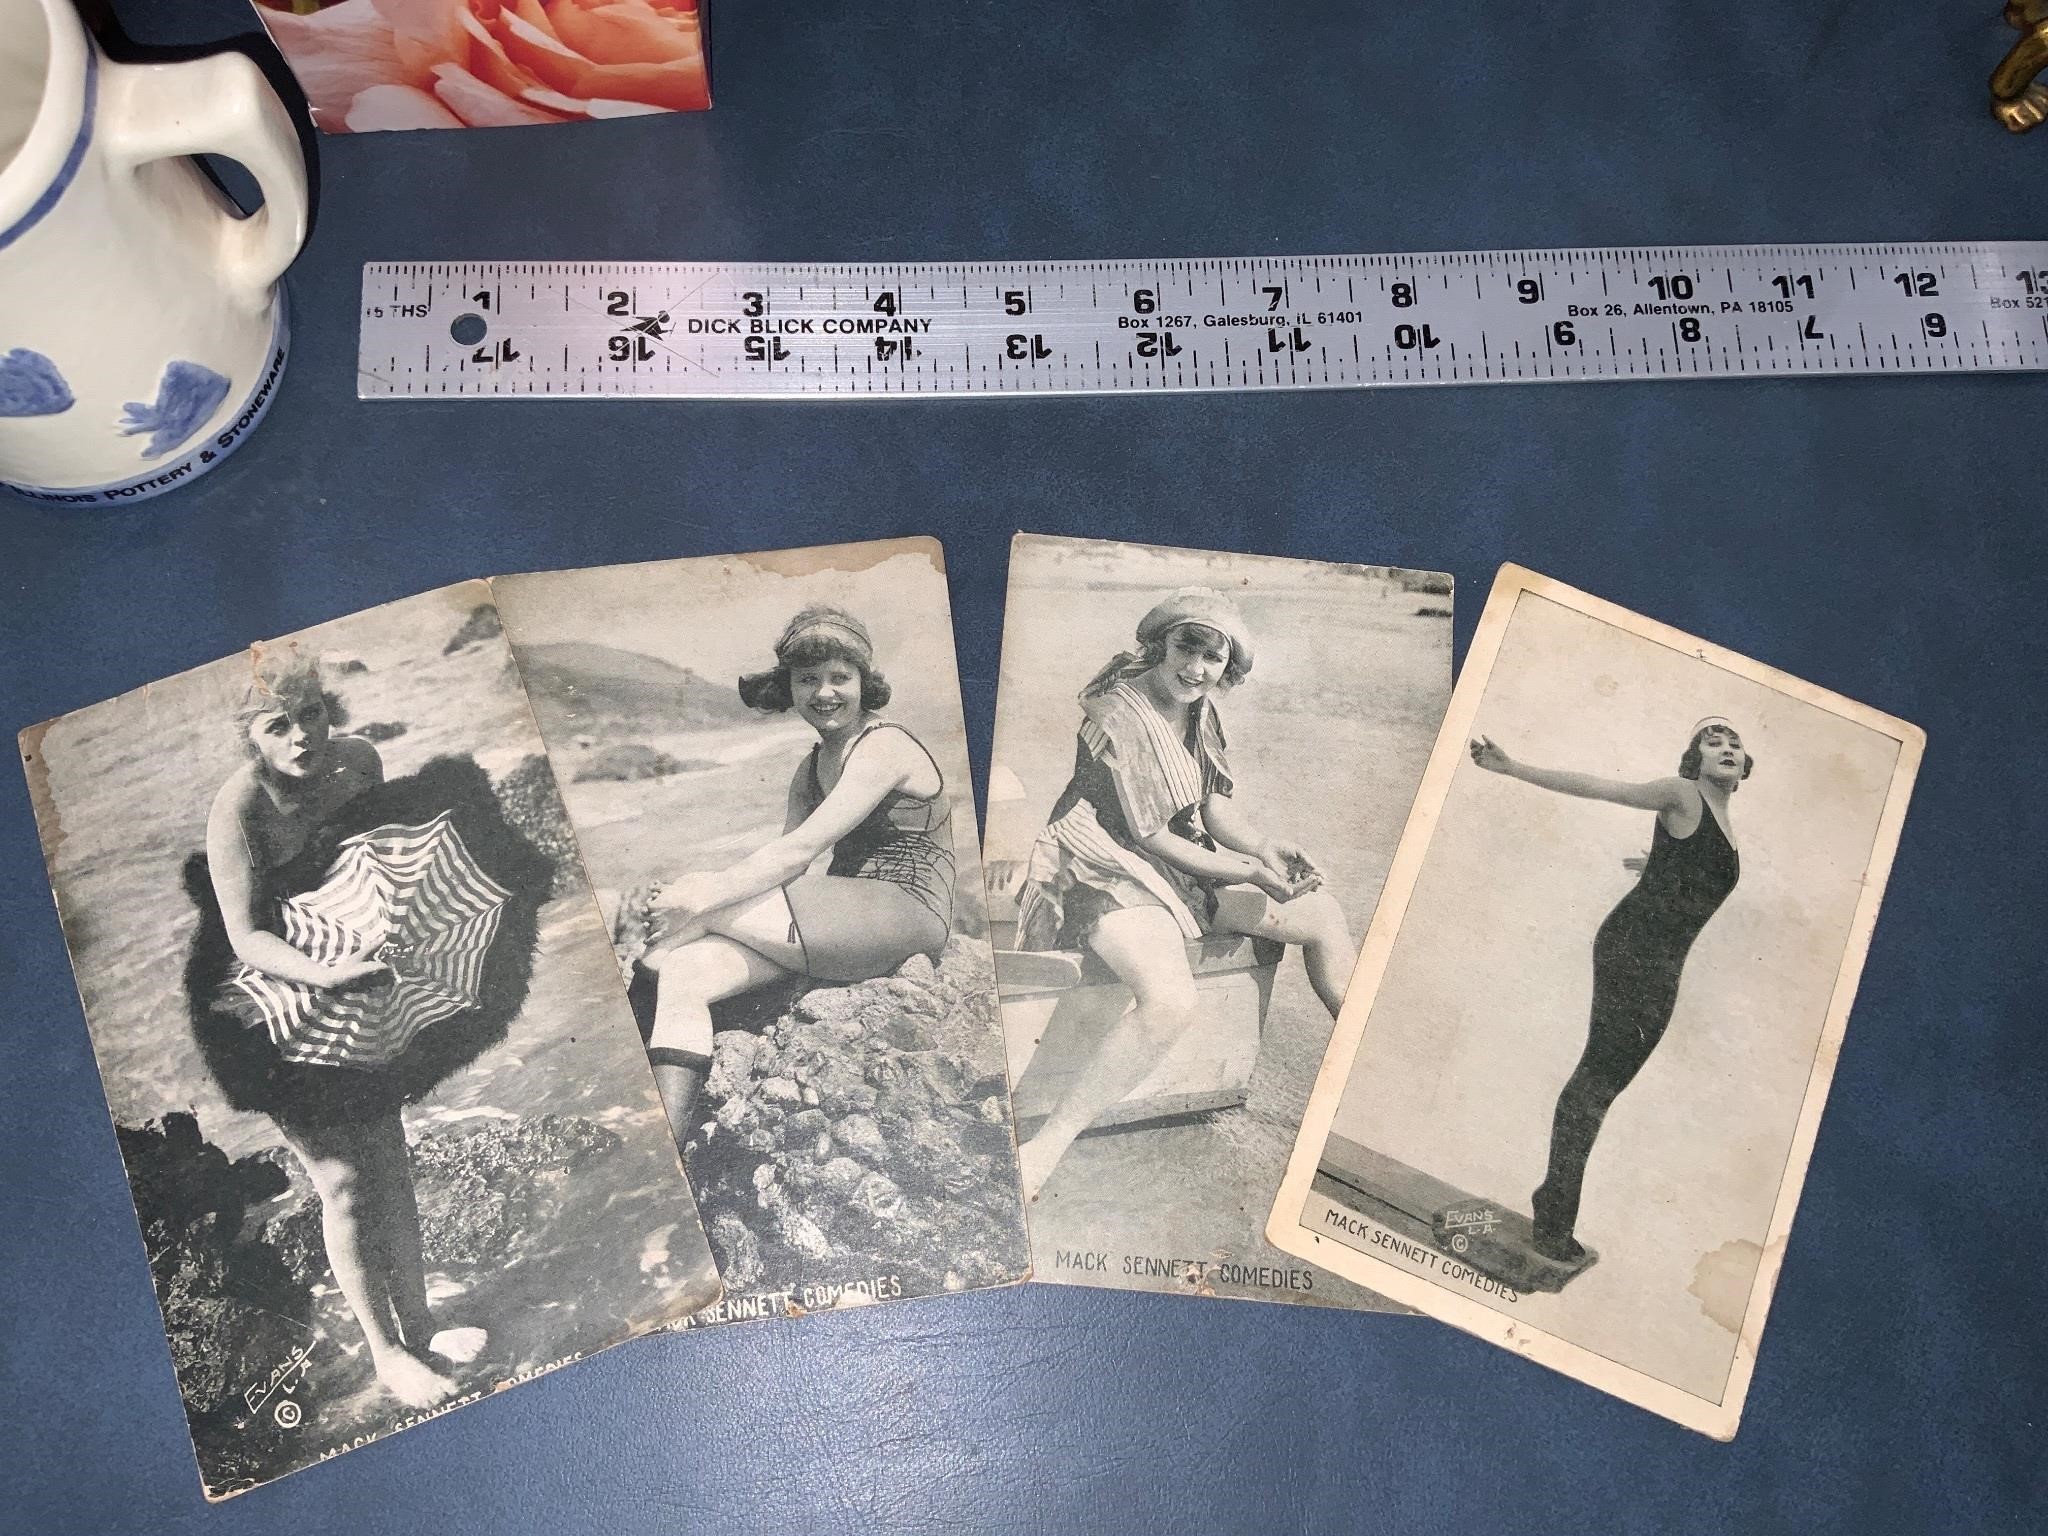 Mack Sennett Comedies Vintage Photo cards